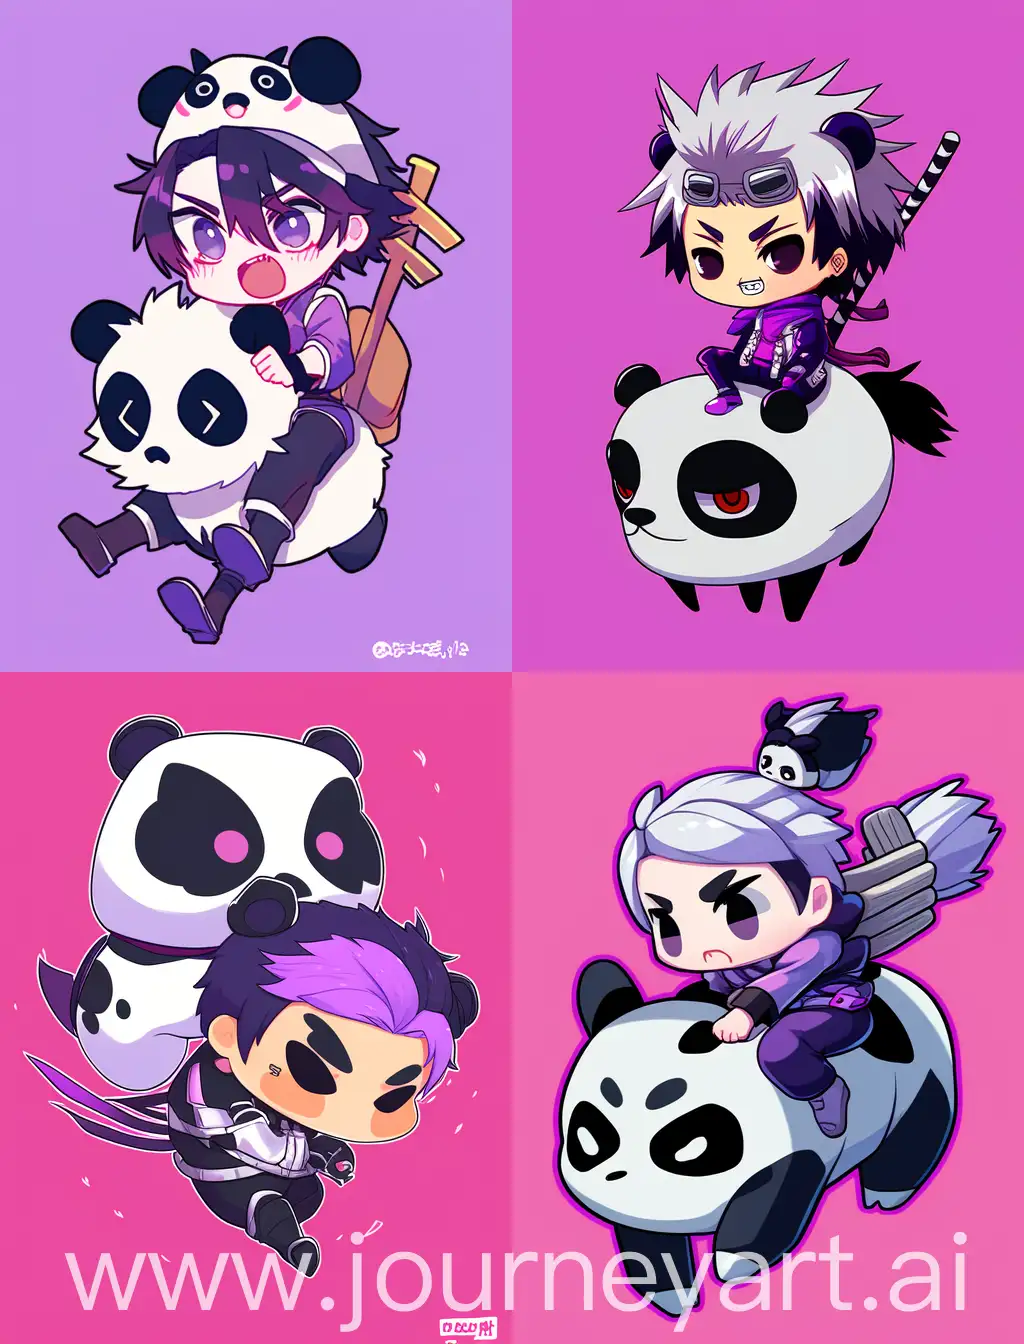 Fierce-Chibi-Anime-Character-Riding-Panda-in-Vibrant-Cartoon-Style